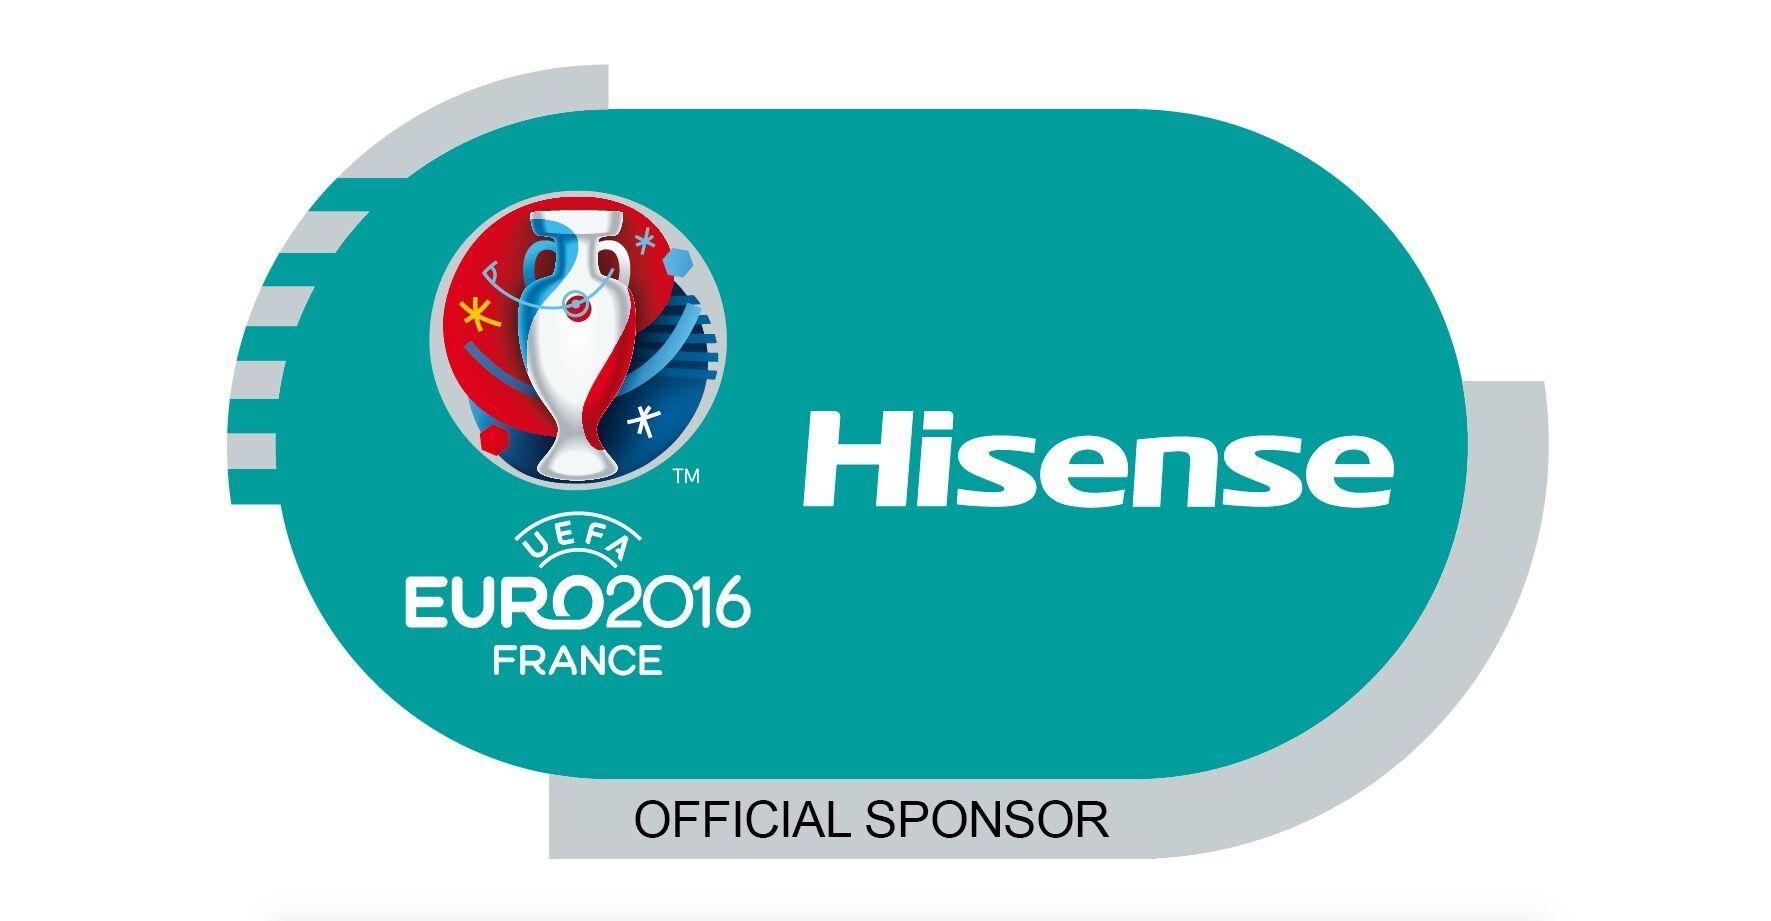 Hisense Logo - UEFA Hisense Logo